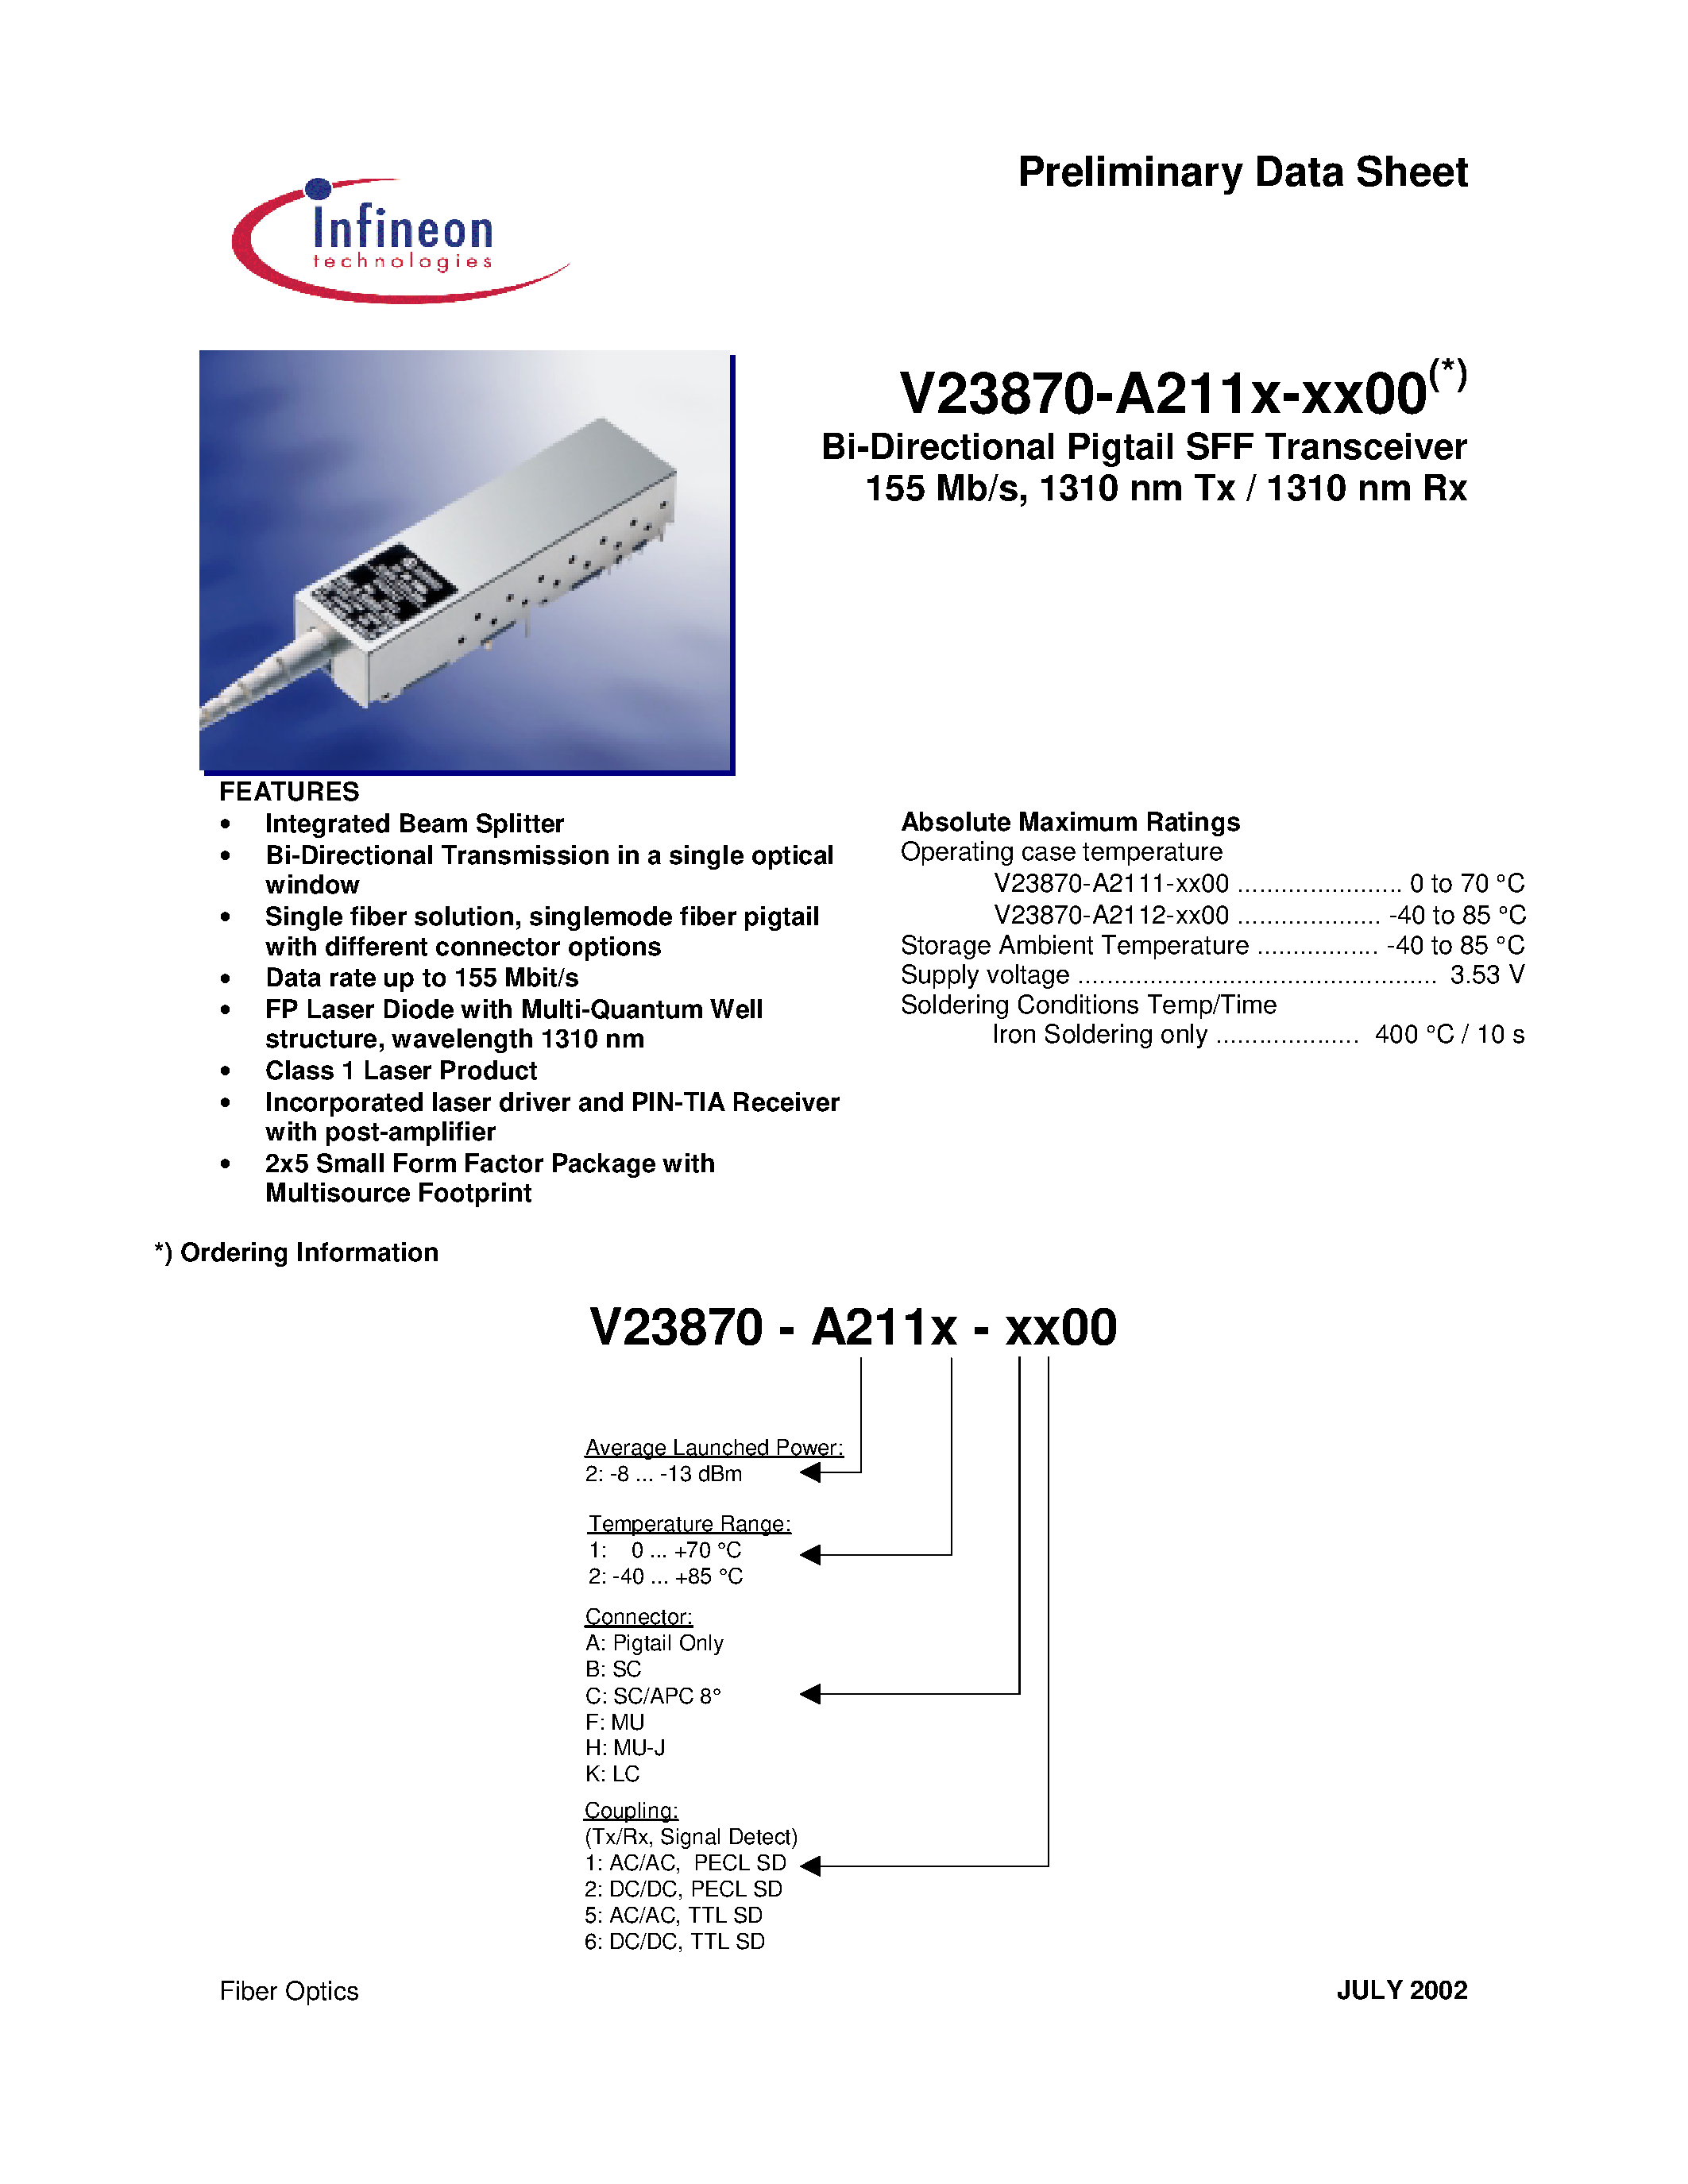 Даташит V23870-A2112-C500 - Bi-Directional Pigtail SFF Transceiver 155 Mb/s/ 1310 nm Tx / 1310 nm Rx страница 1